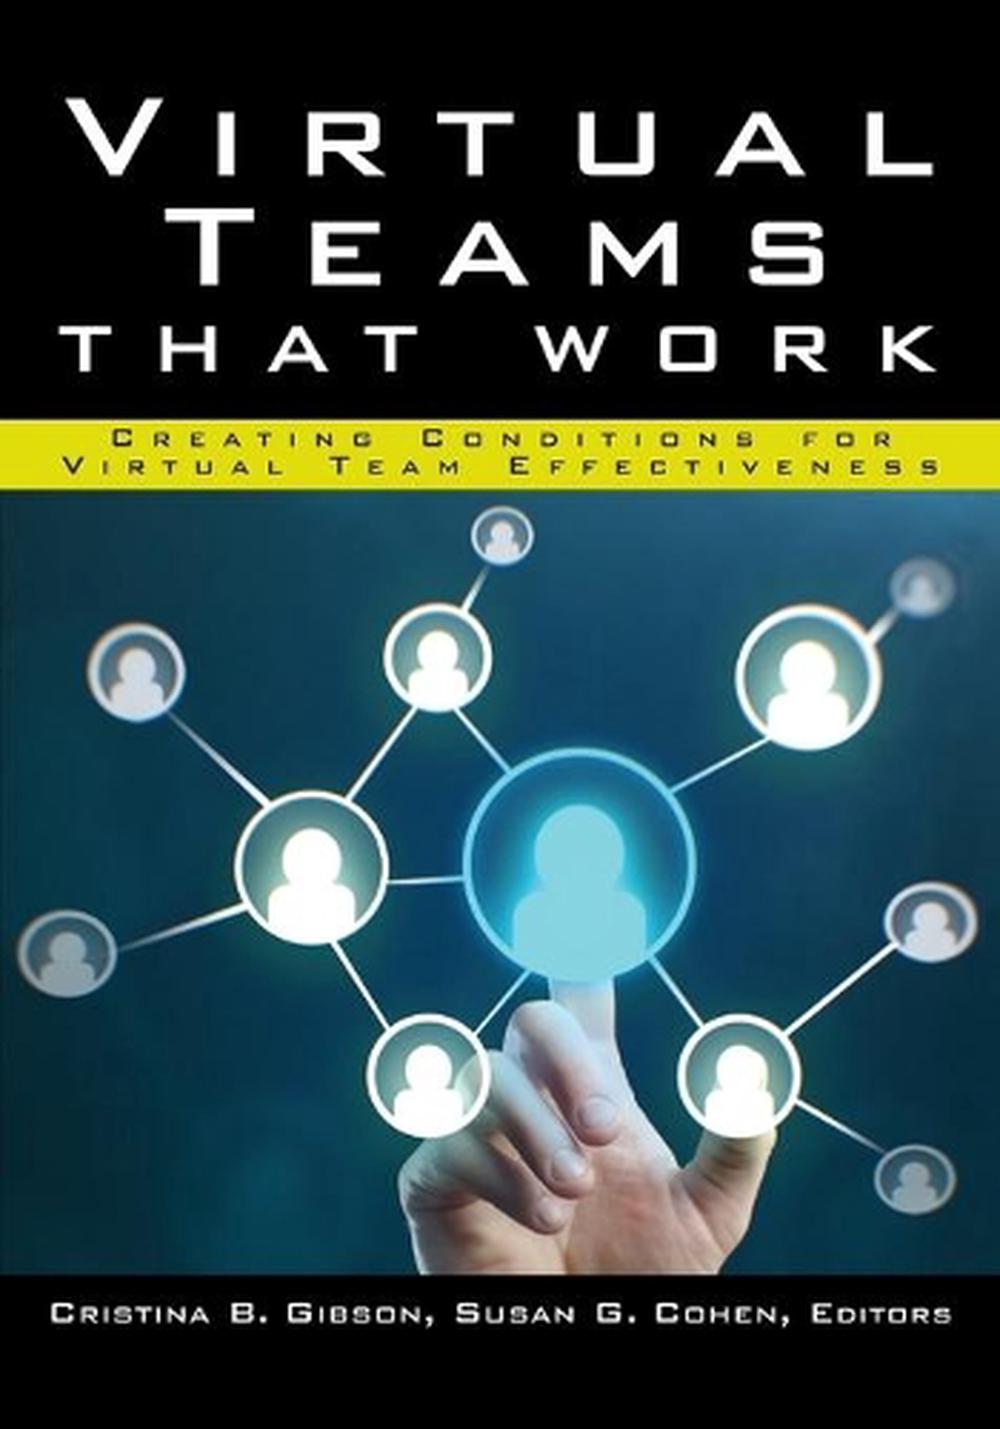 define virtual work teams